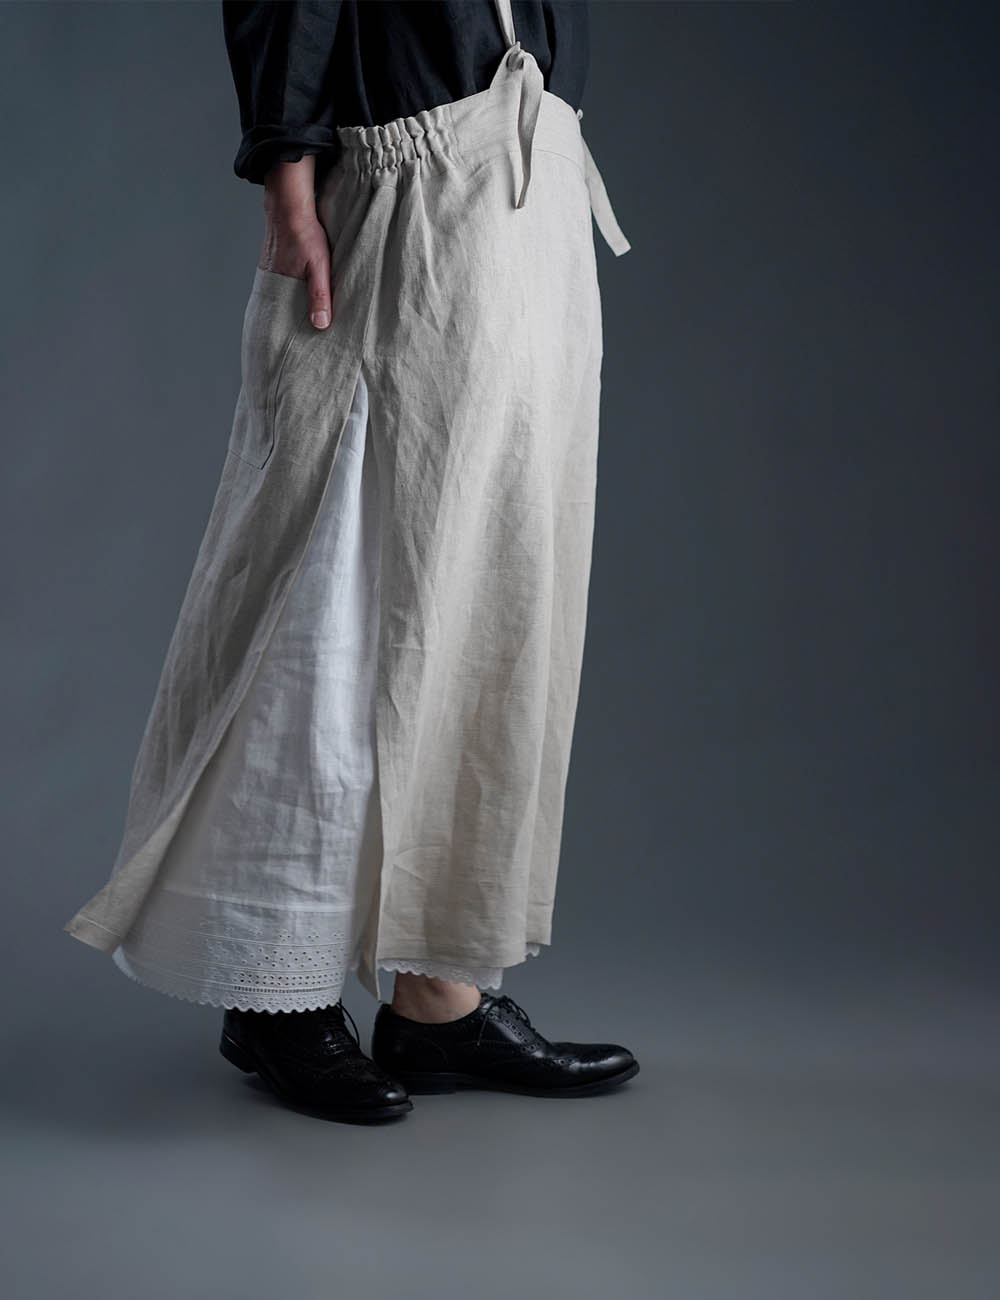 【wafu】Linen Skirt レーススカート / 白色 p002c-wht1